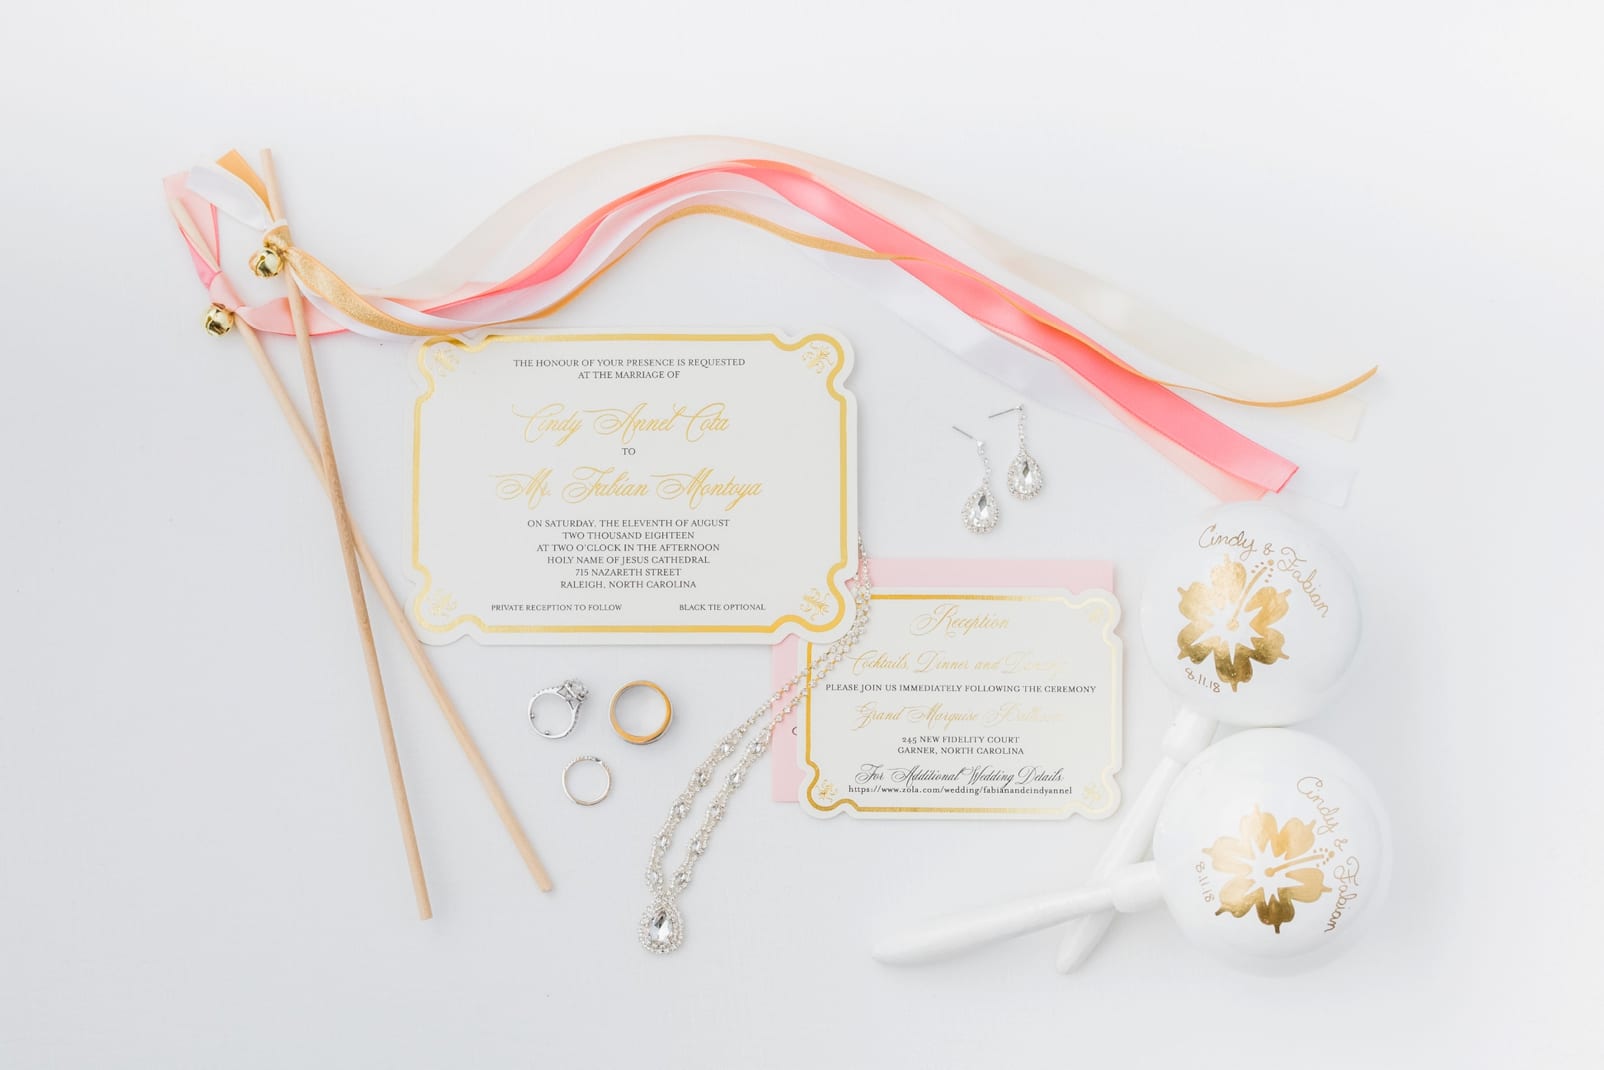 Theresa Jatko Designs wedding invitation suite with maracha favors photo